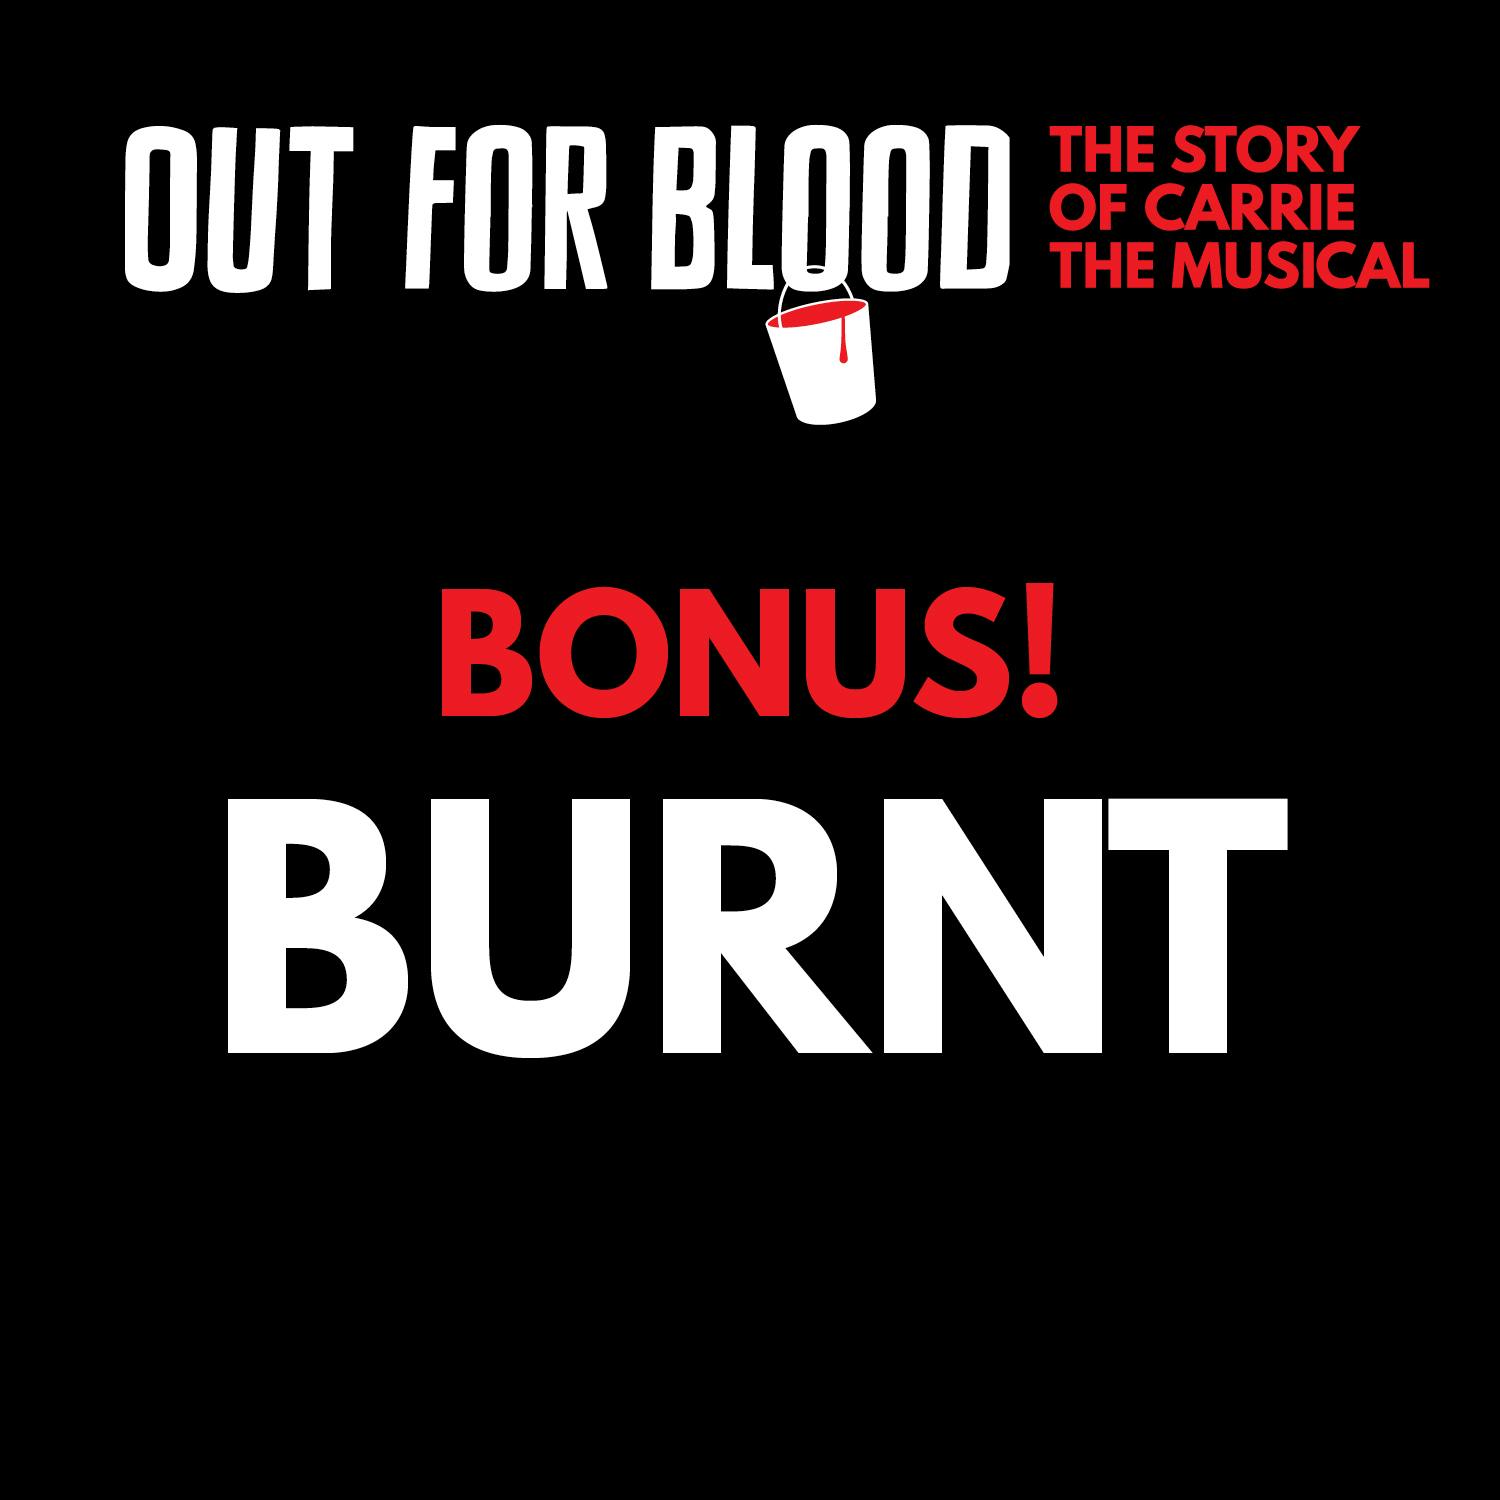 Bonus! Burnt